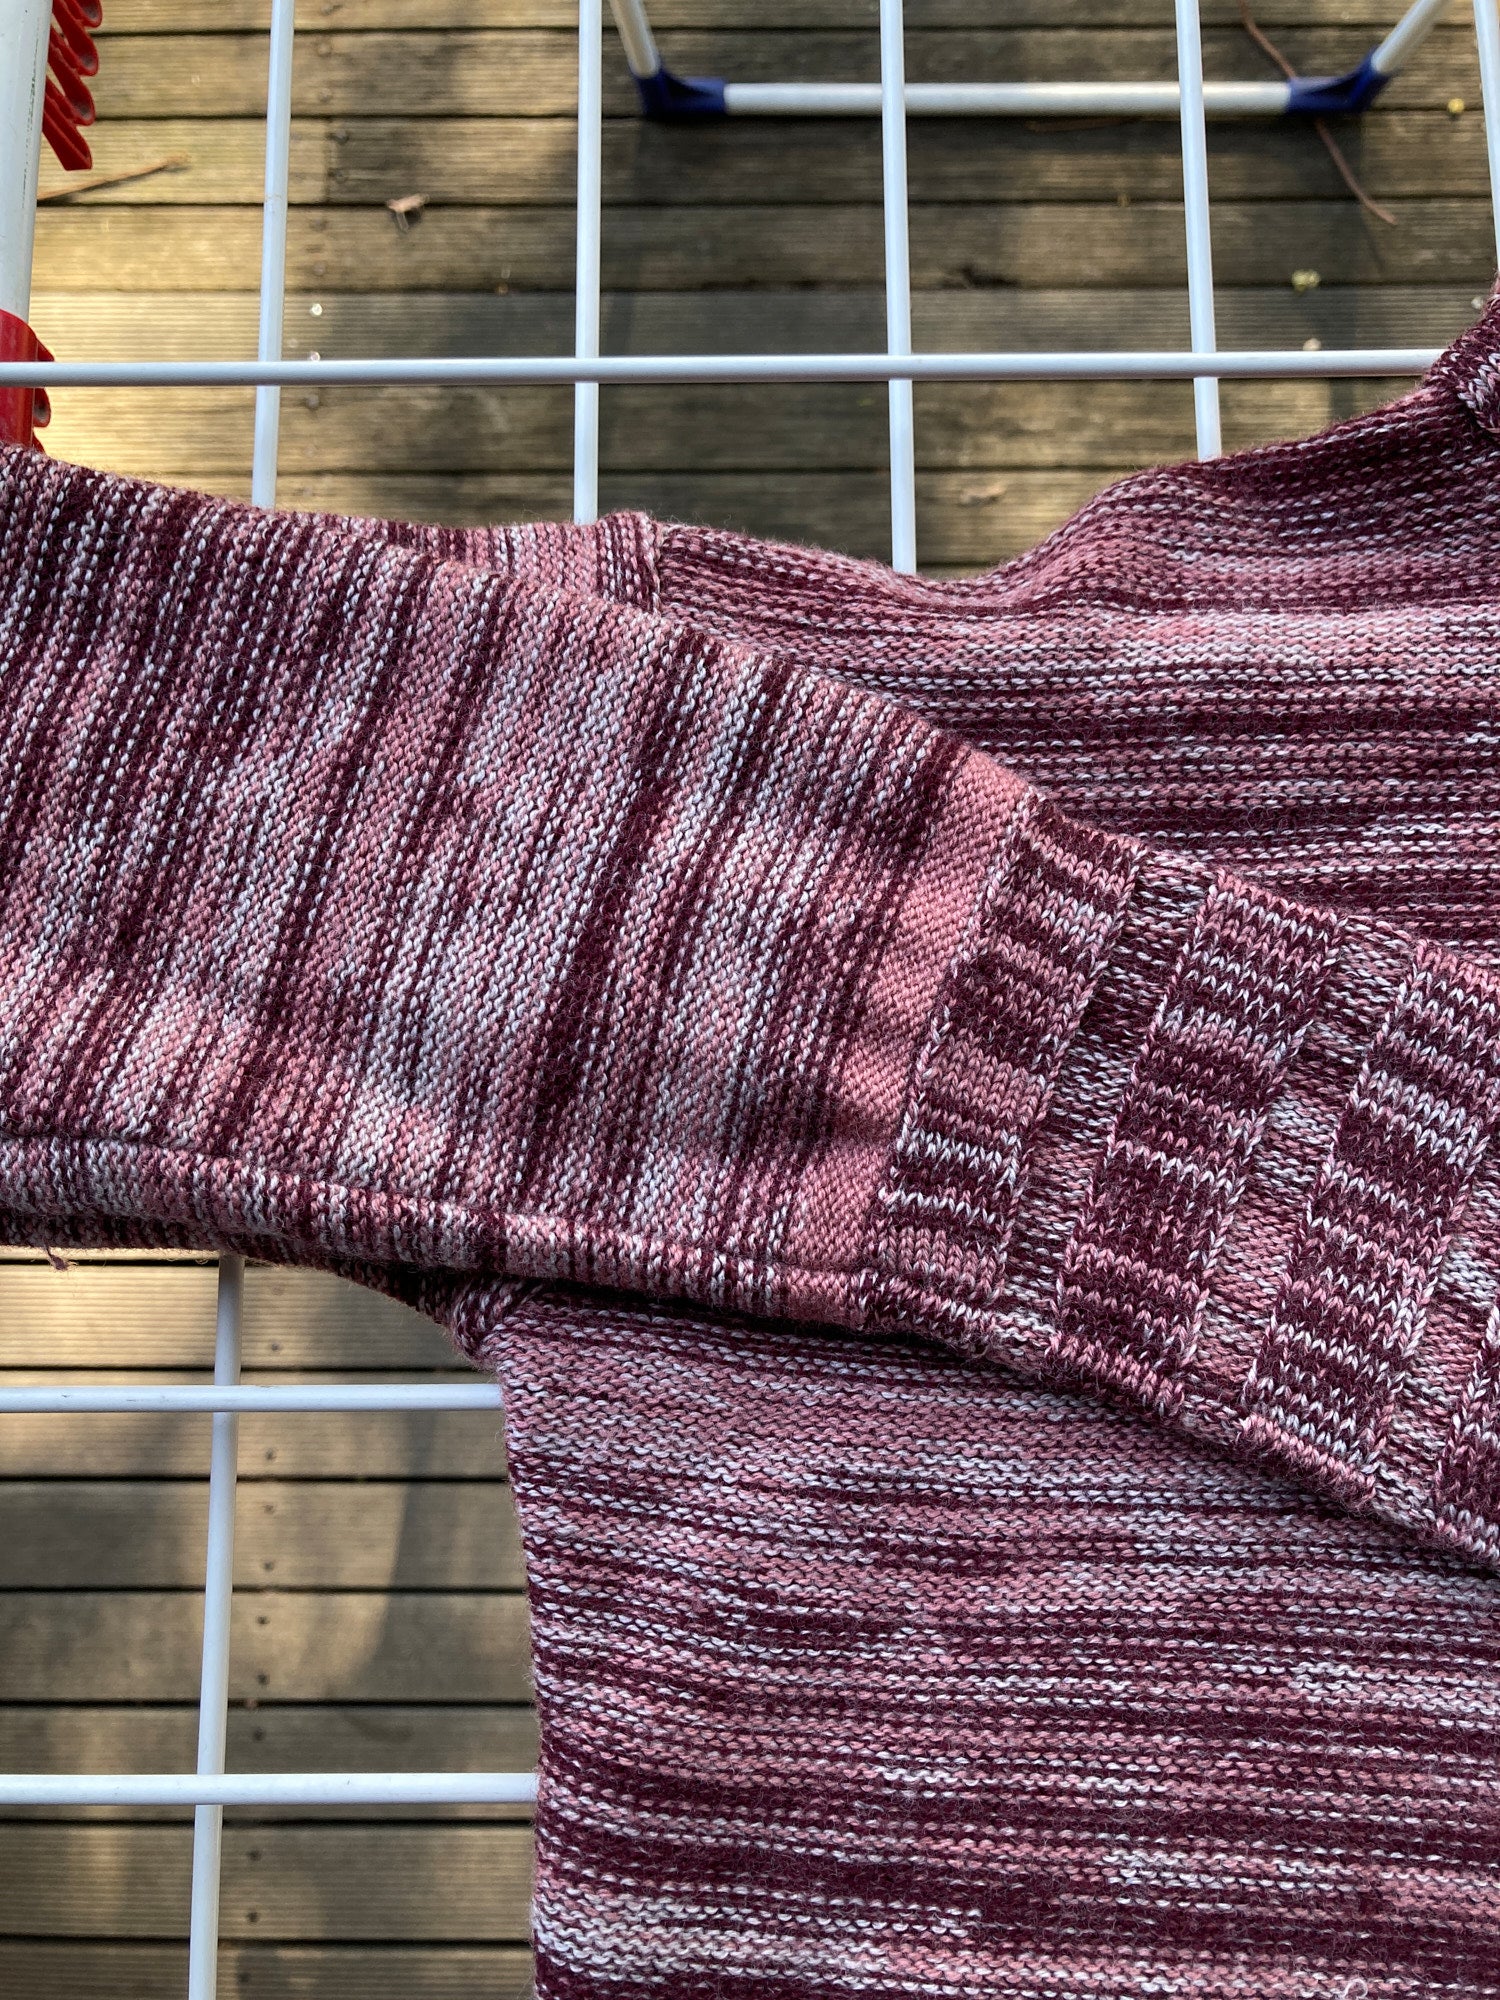 Mandarina Duck 1990s pink ish heathered wool extreme turtleneck sweater - sz 40